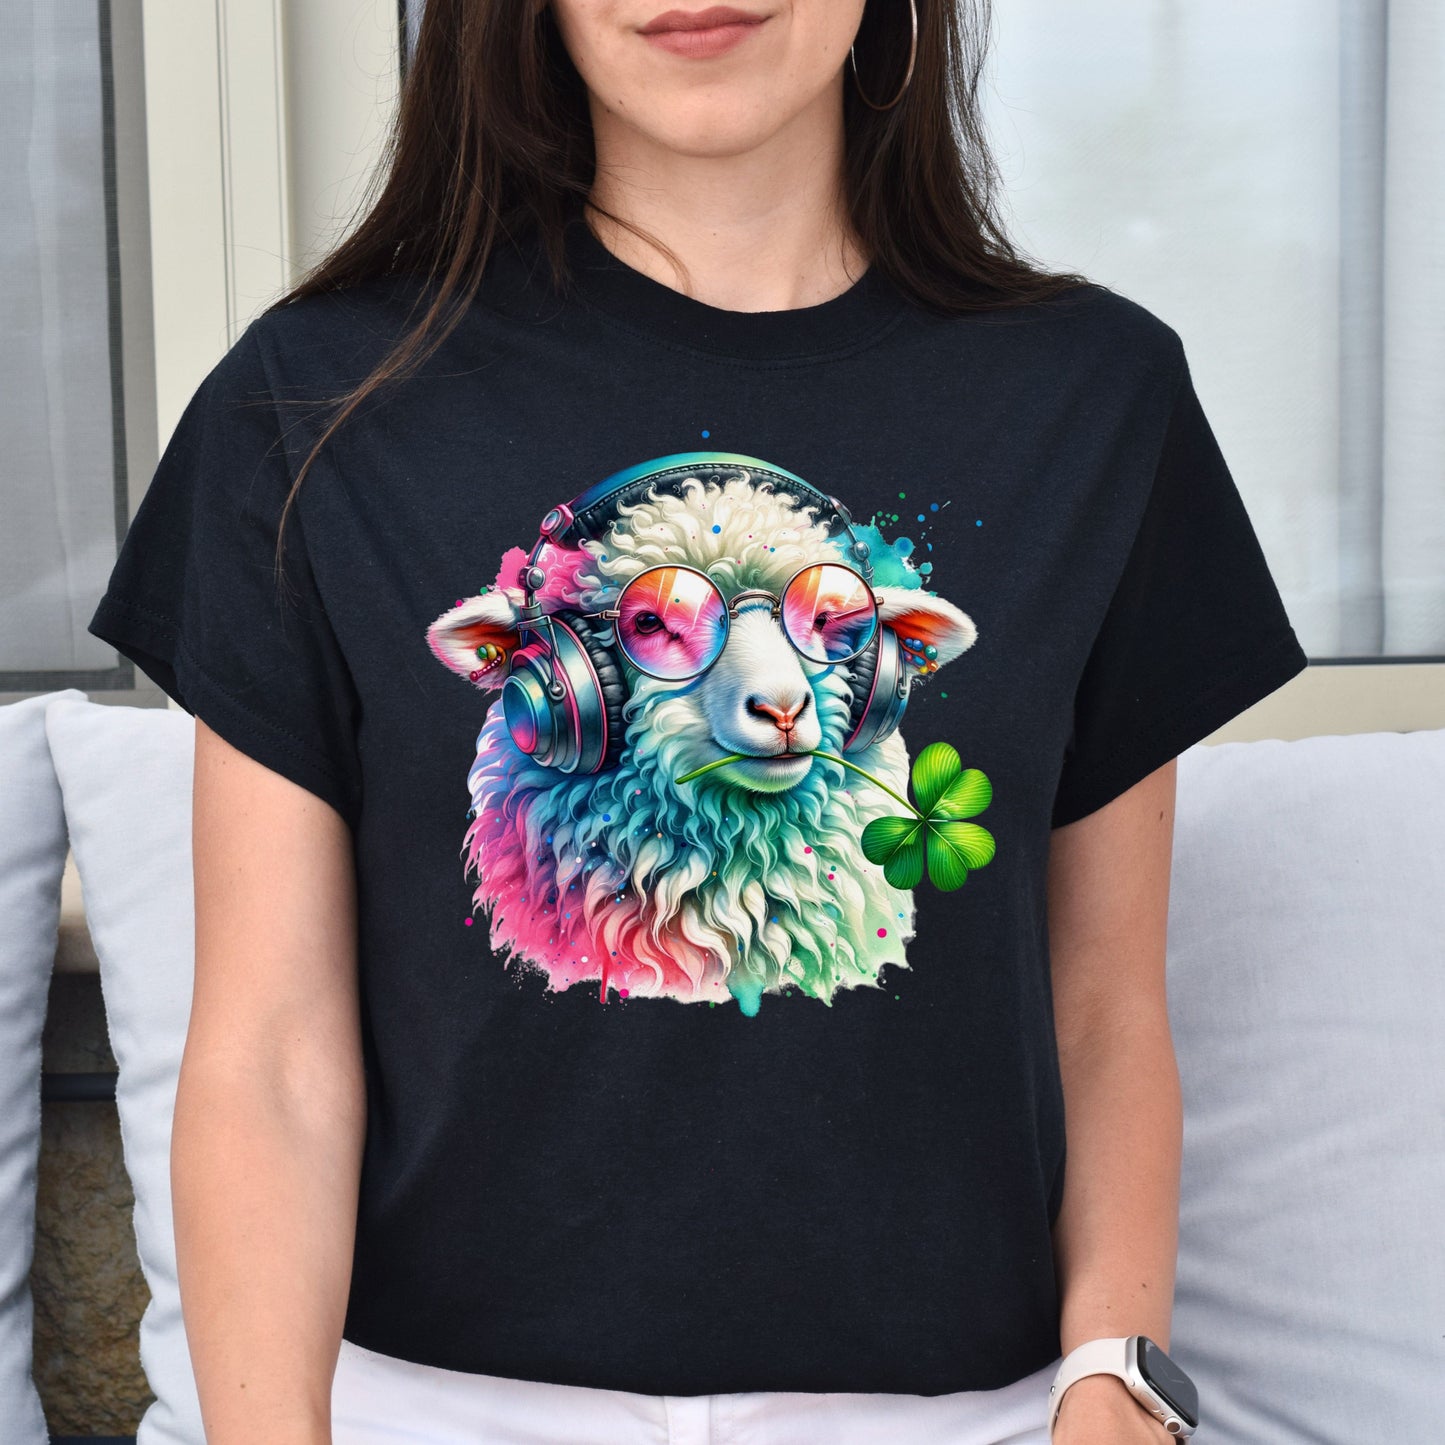 Irish Sheep with clover Colorful Unisex T-Shirt cool sheep farm tee Black Navy Dark Heather-Family-Gift-Planet